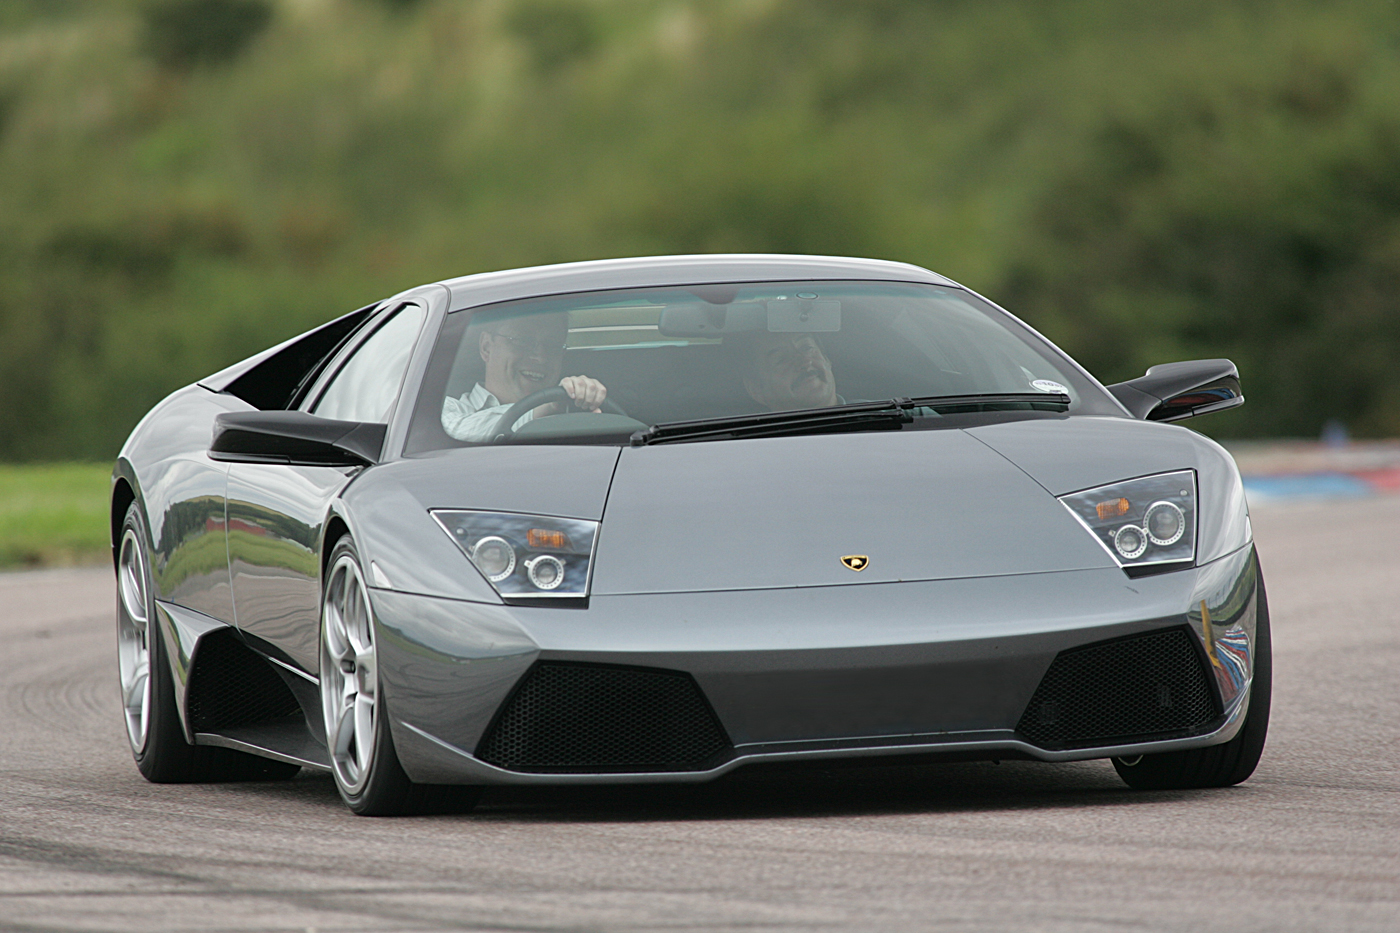 File:Gray Lamborghini LP640.jpg - Wikipedia, the free encyclopedia